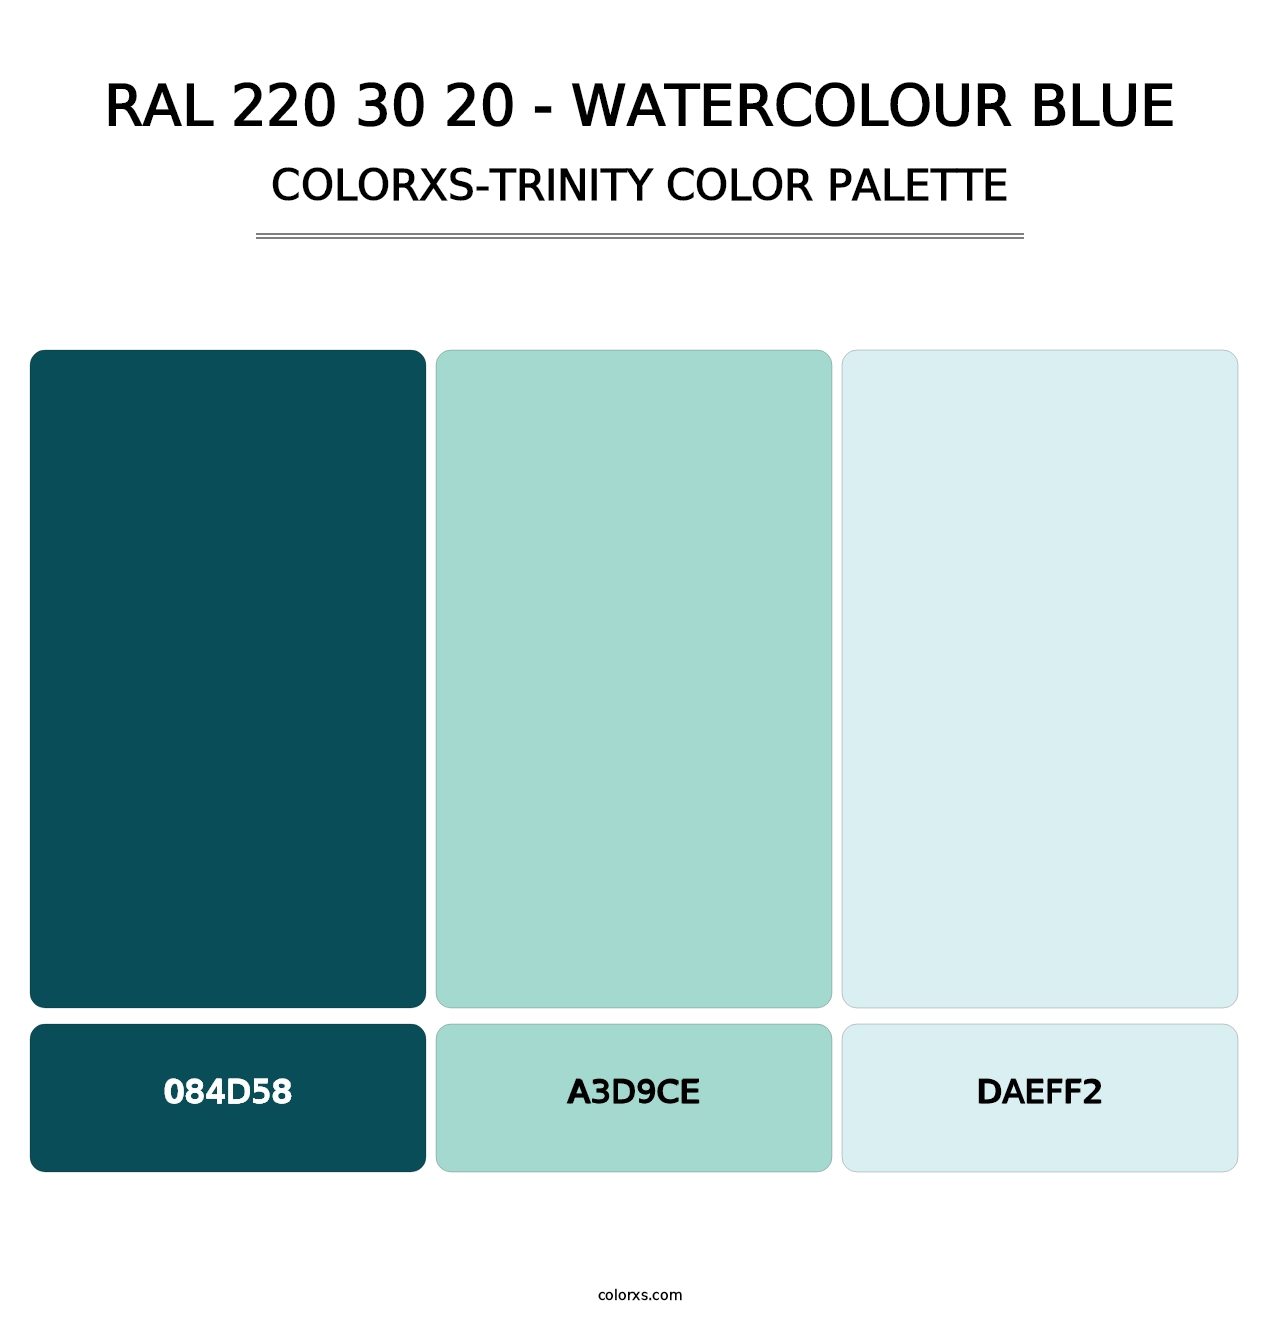 RAL 220 30 20 - Watercolour Blue - Colorxs Trinity Palette